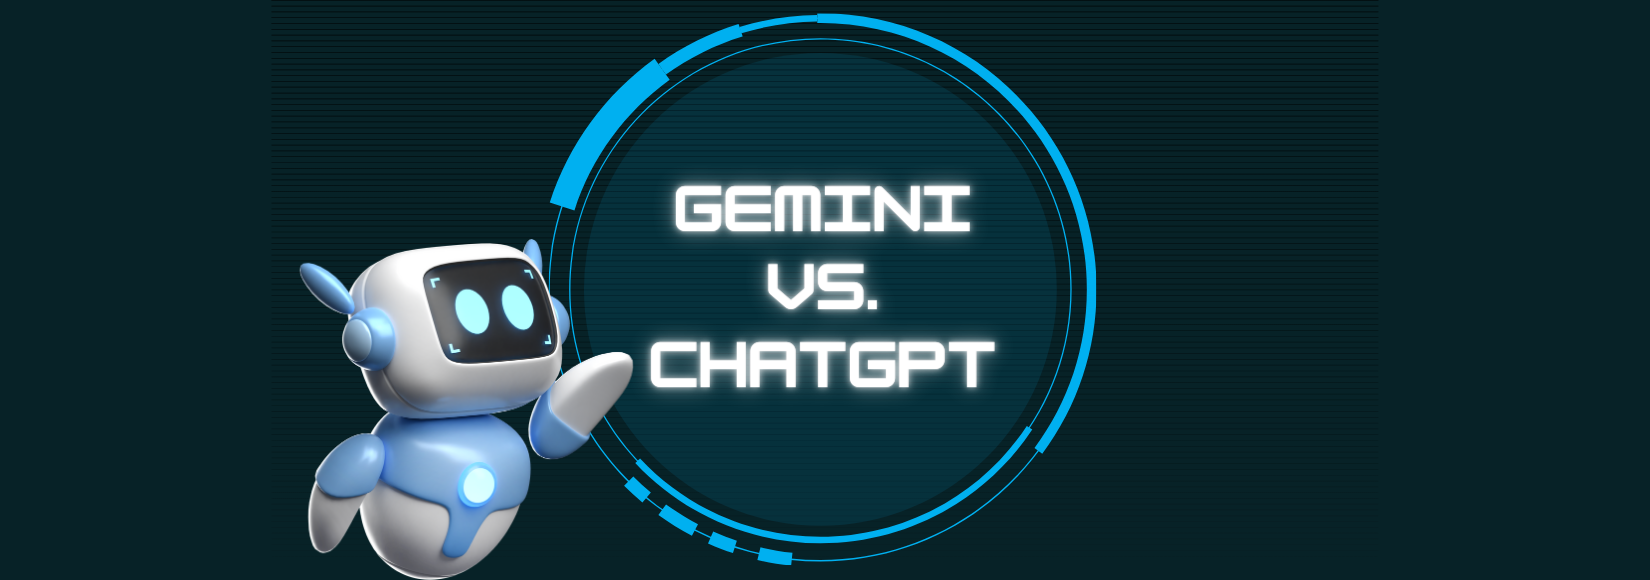 ChatGPT and Google Gemini